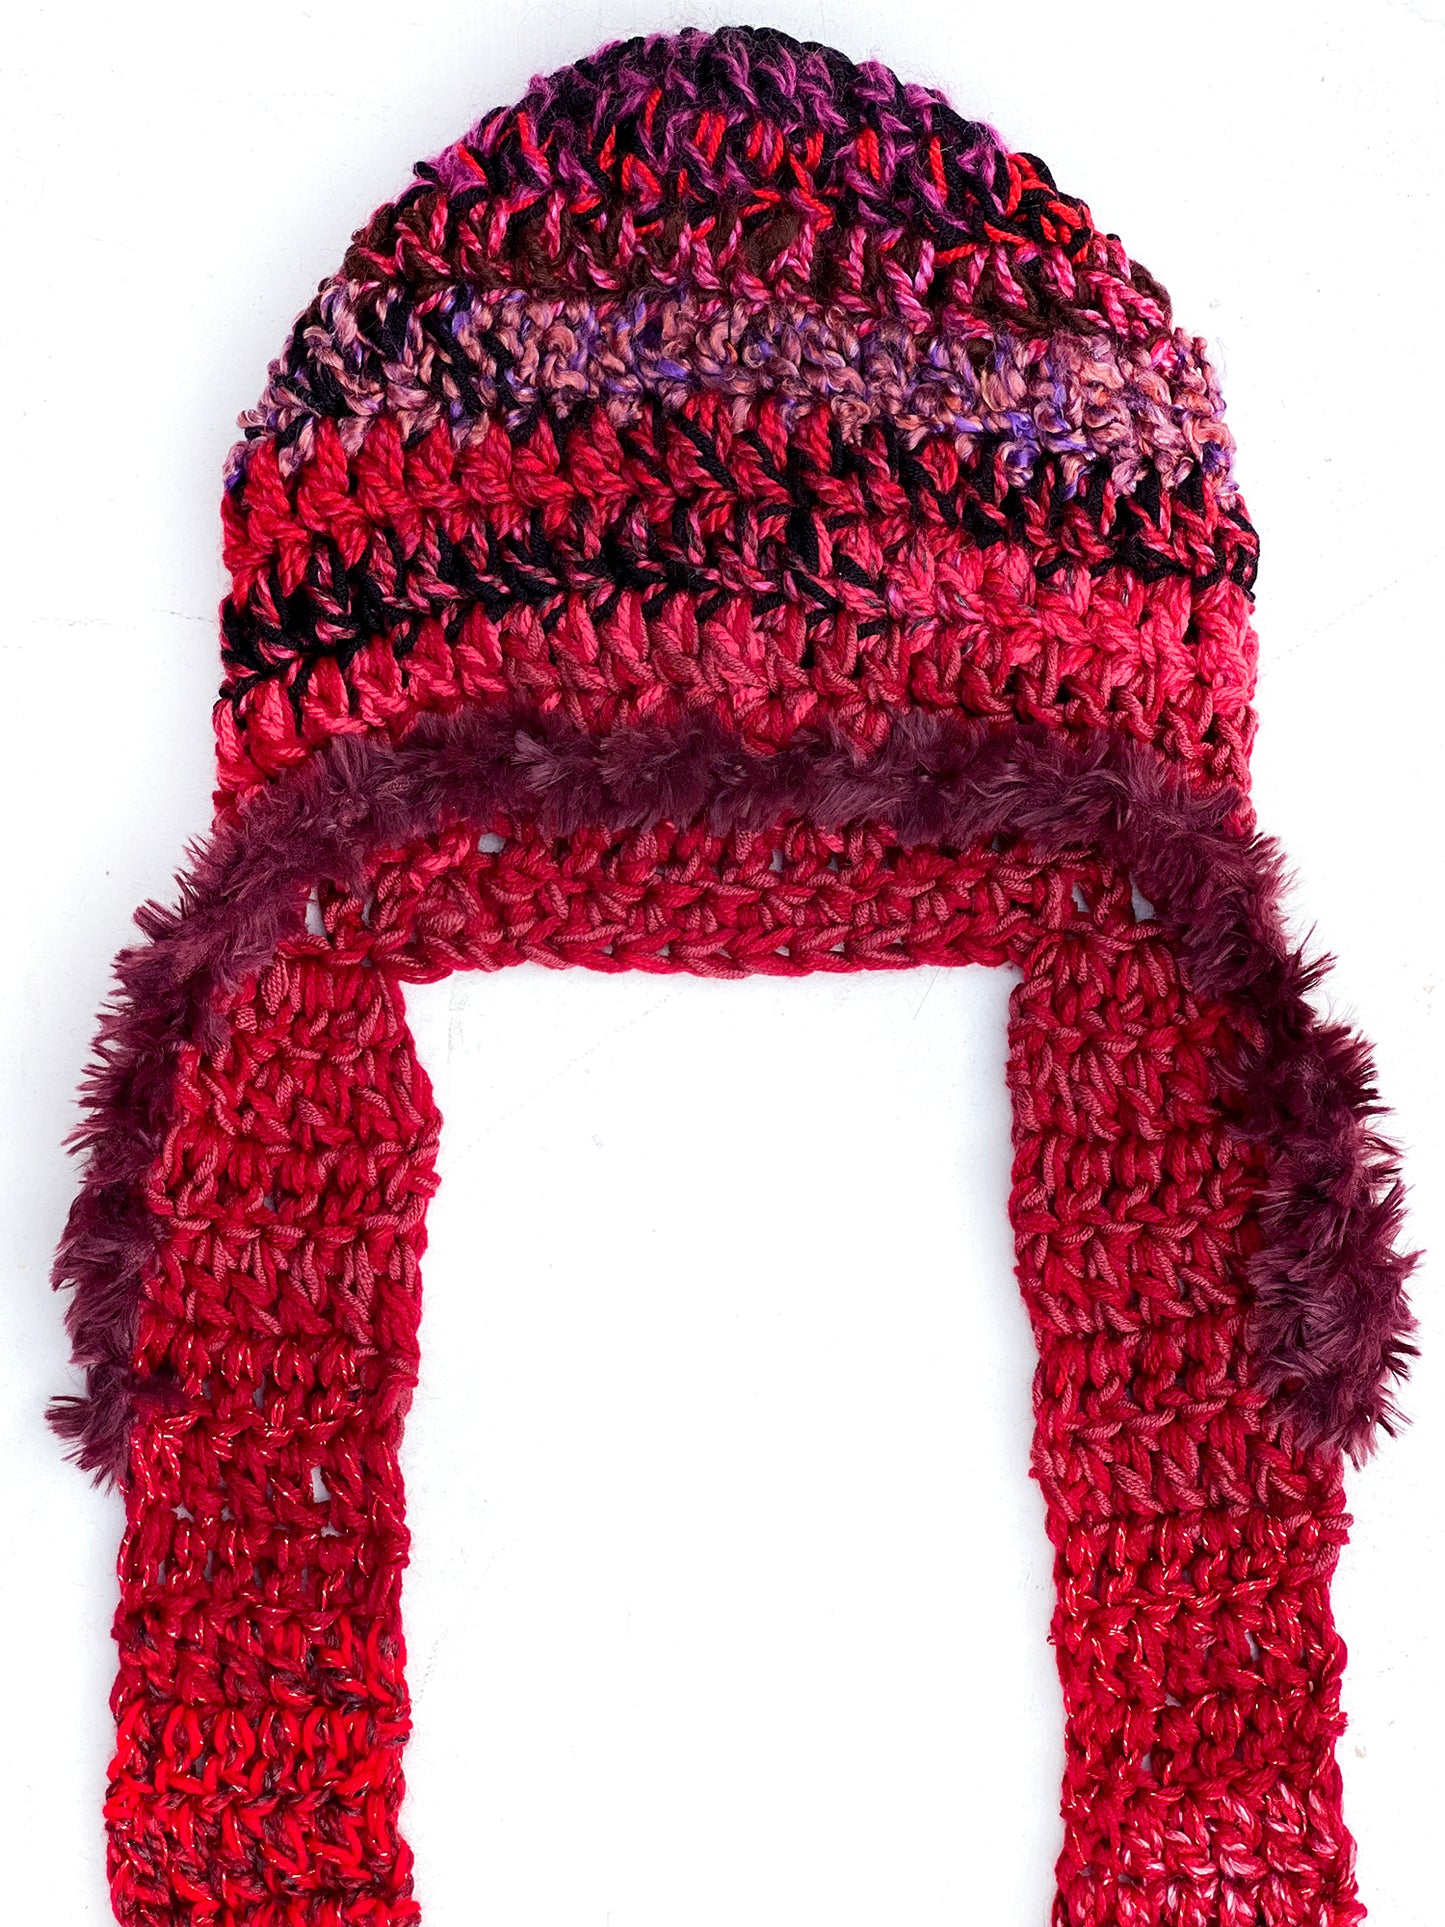 Cool Cat Crochet Hat #4 S/M